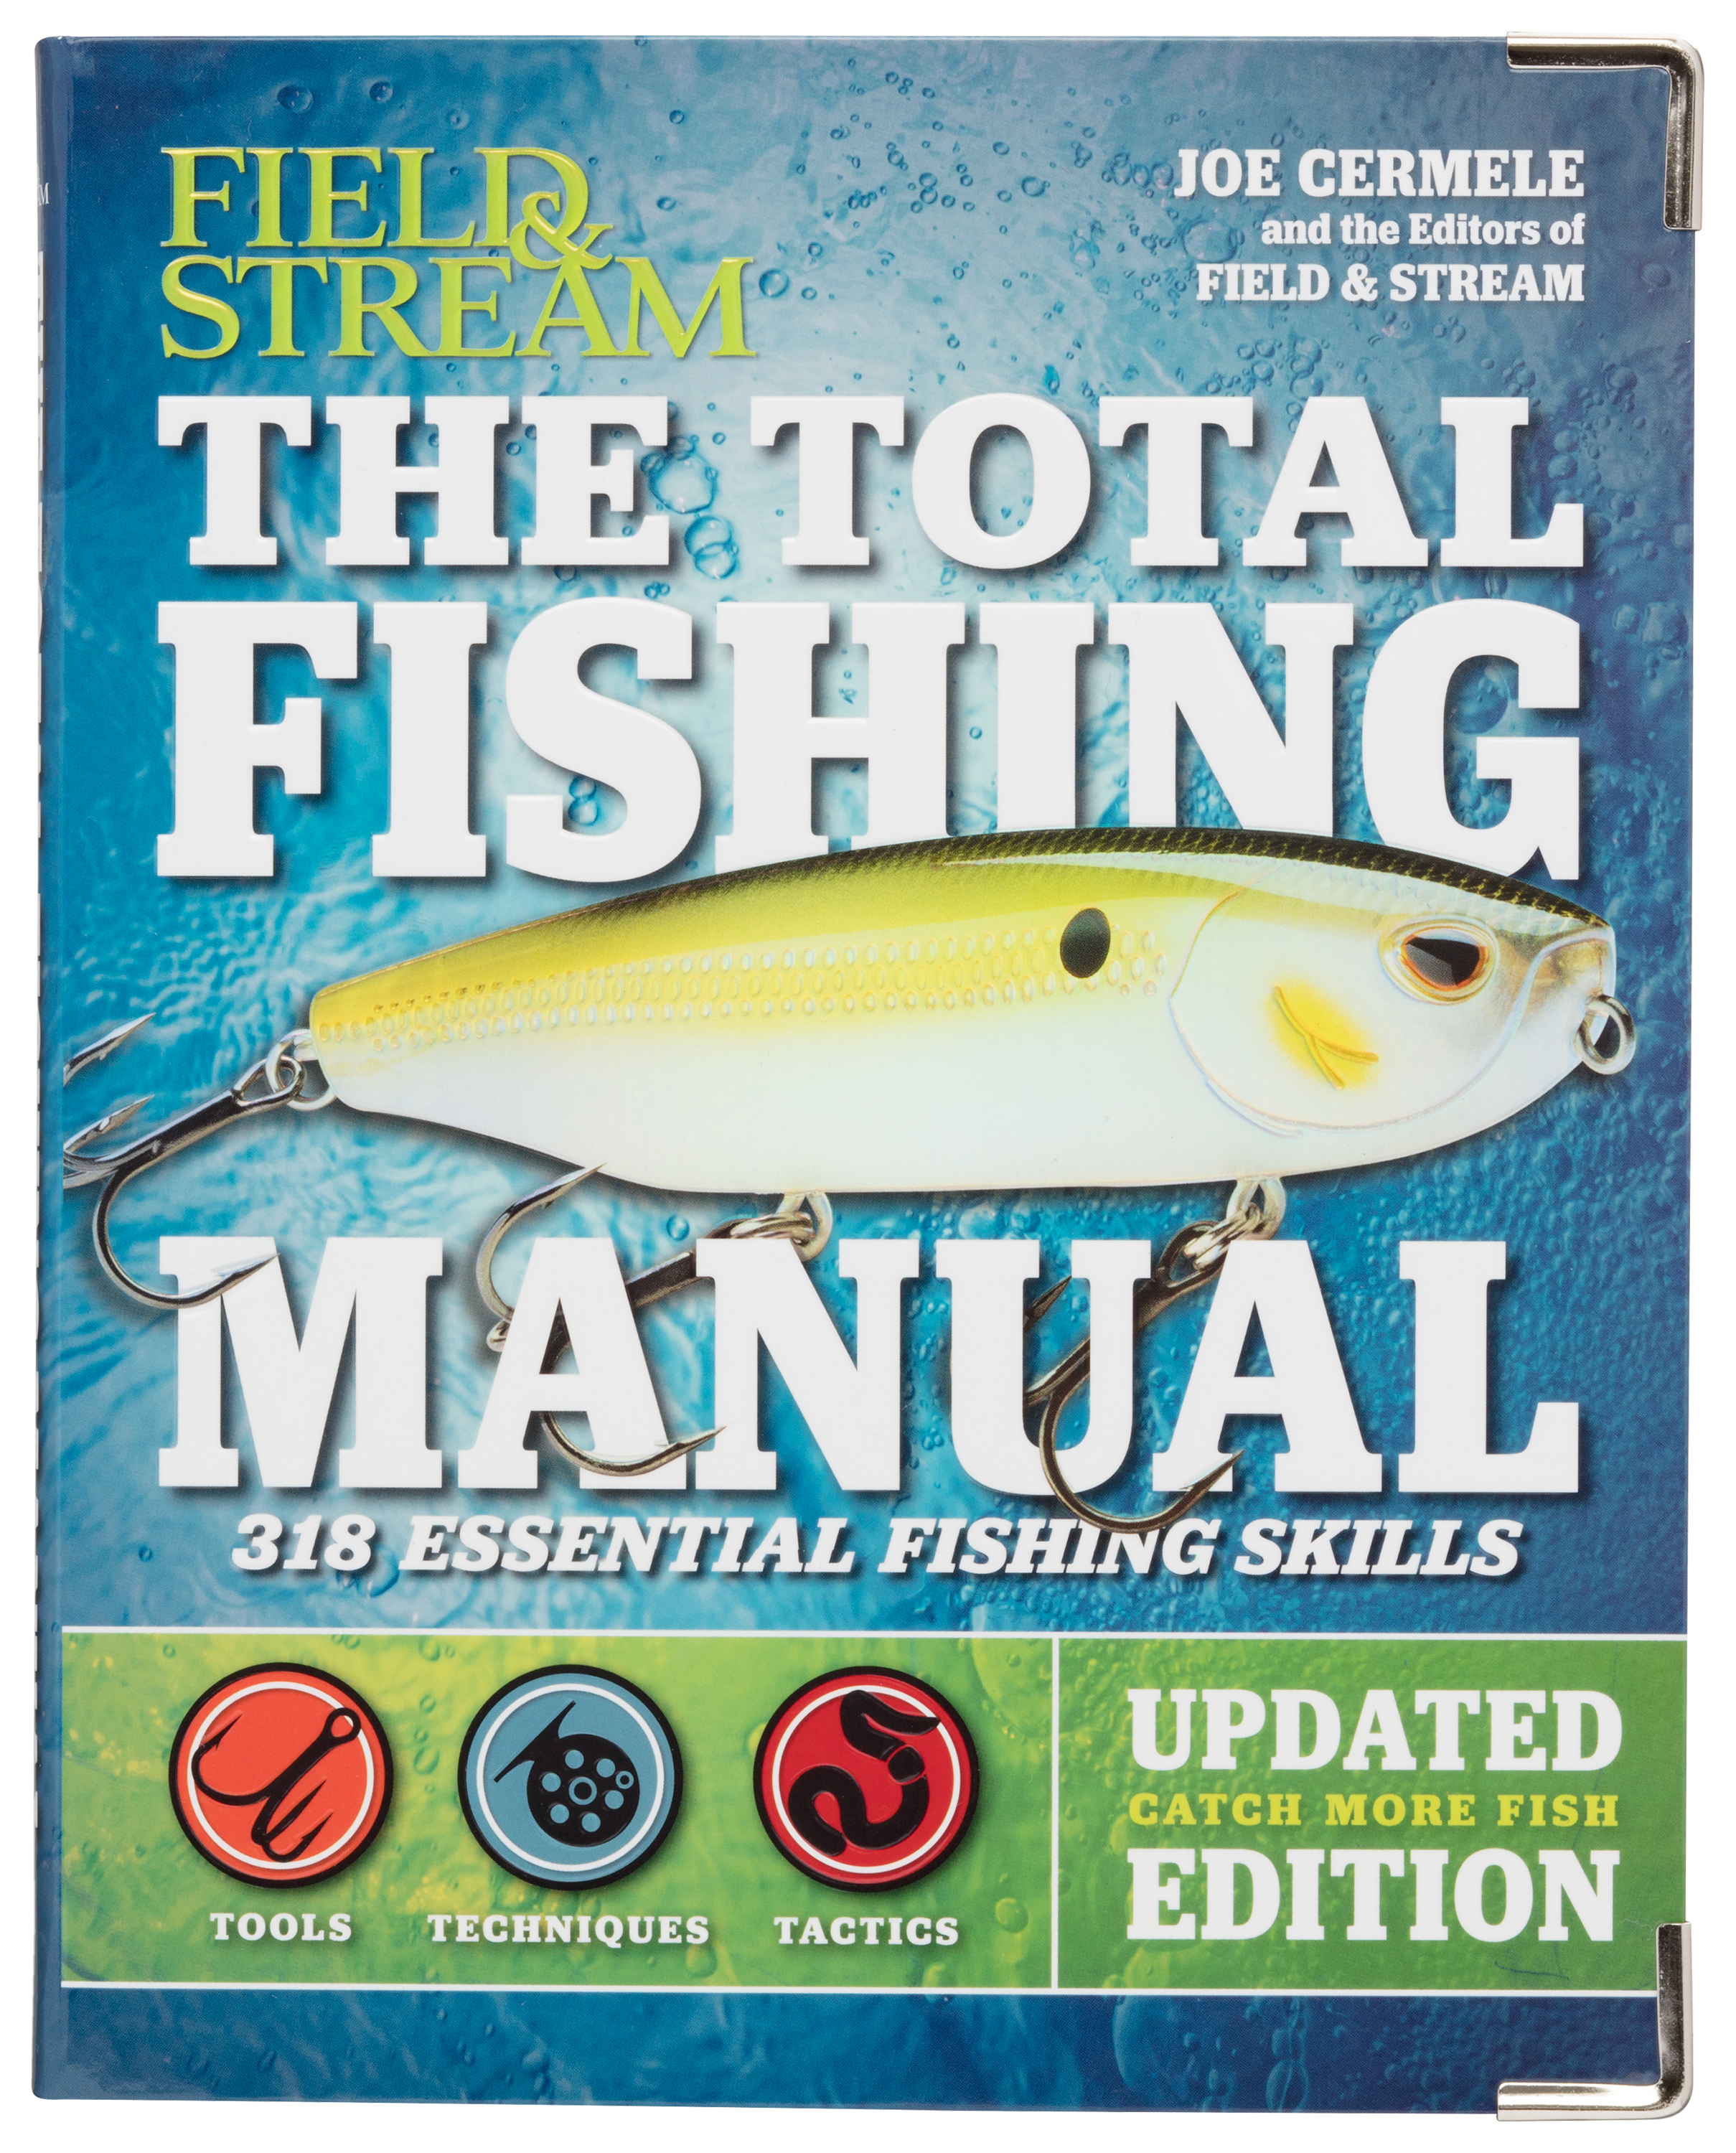 DownloadPDF The Total Fishing Manual (Paperback Edition): 318